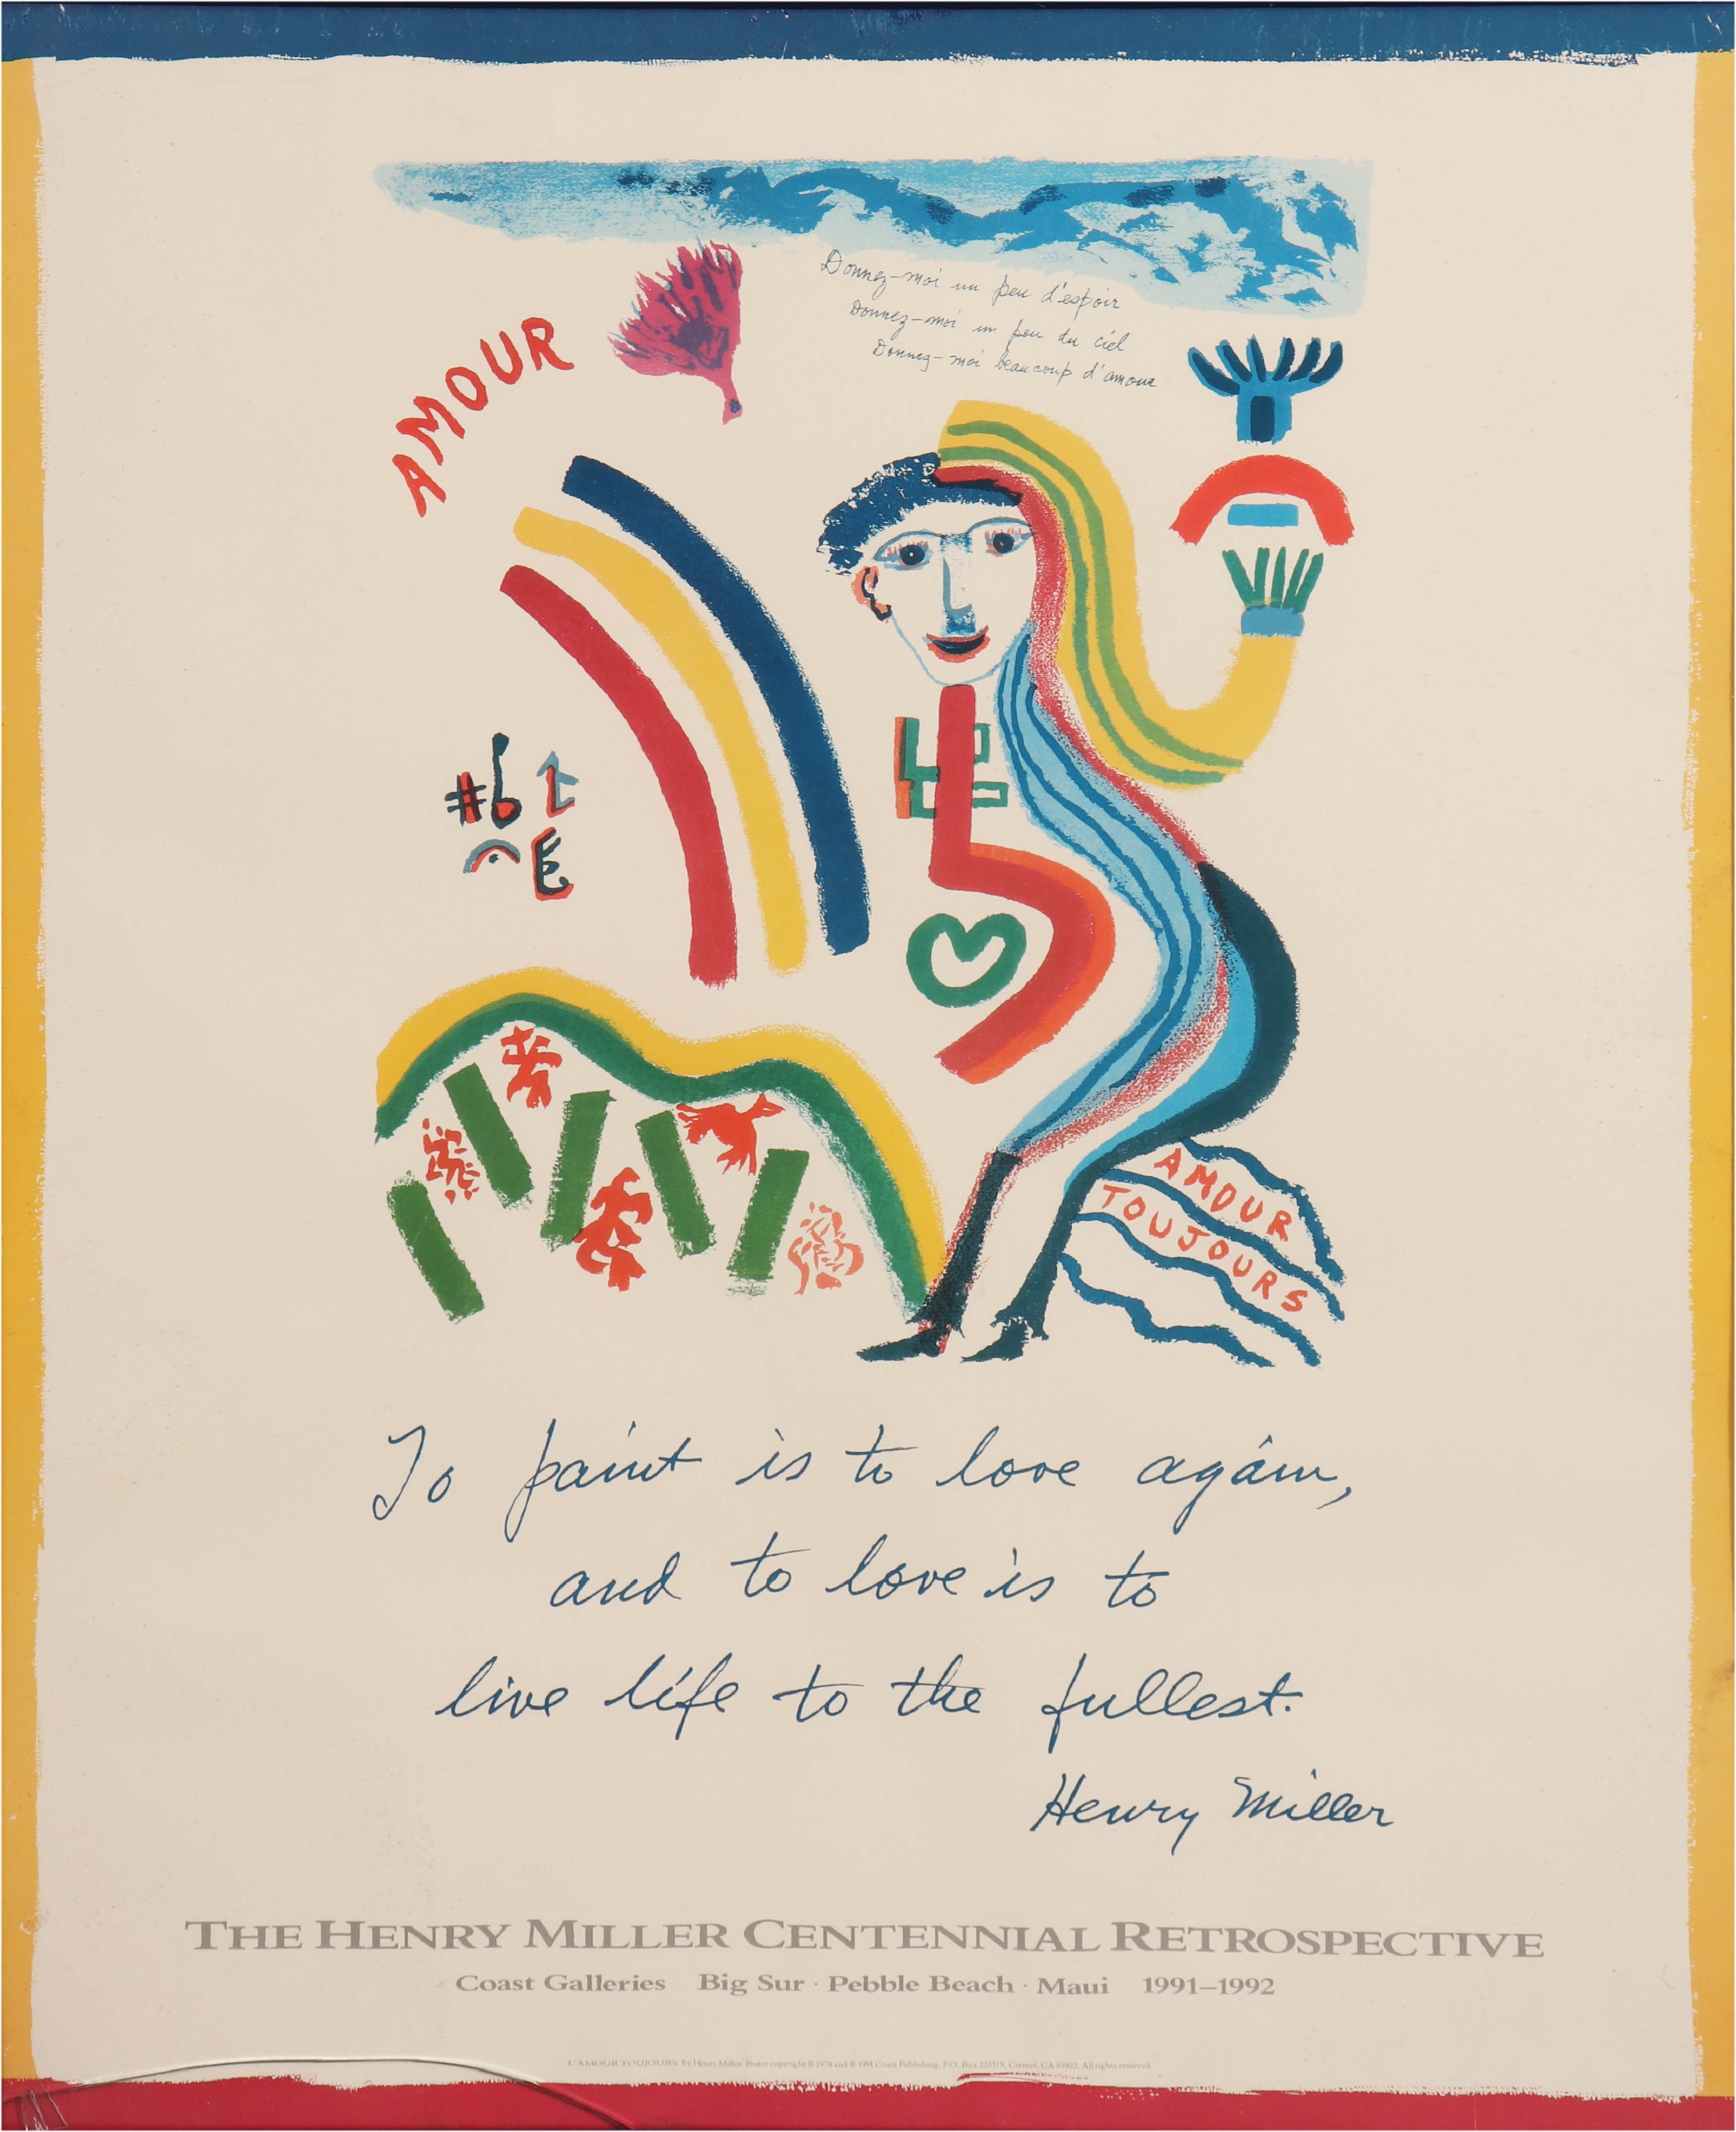 "The Henry Miller Centennial Retrospective 1991-1992"